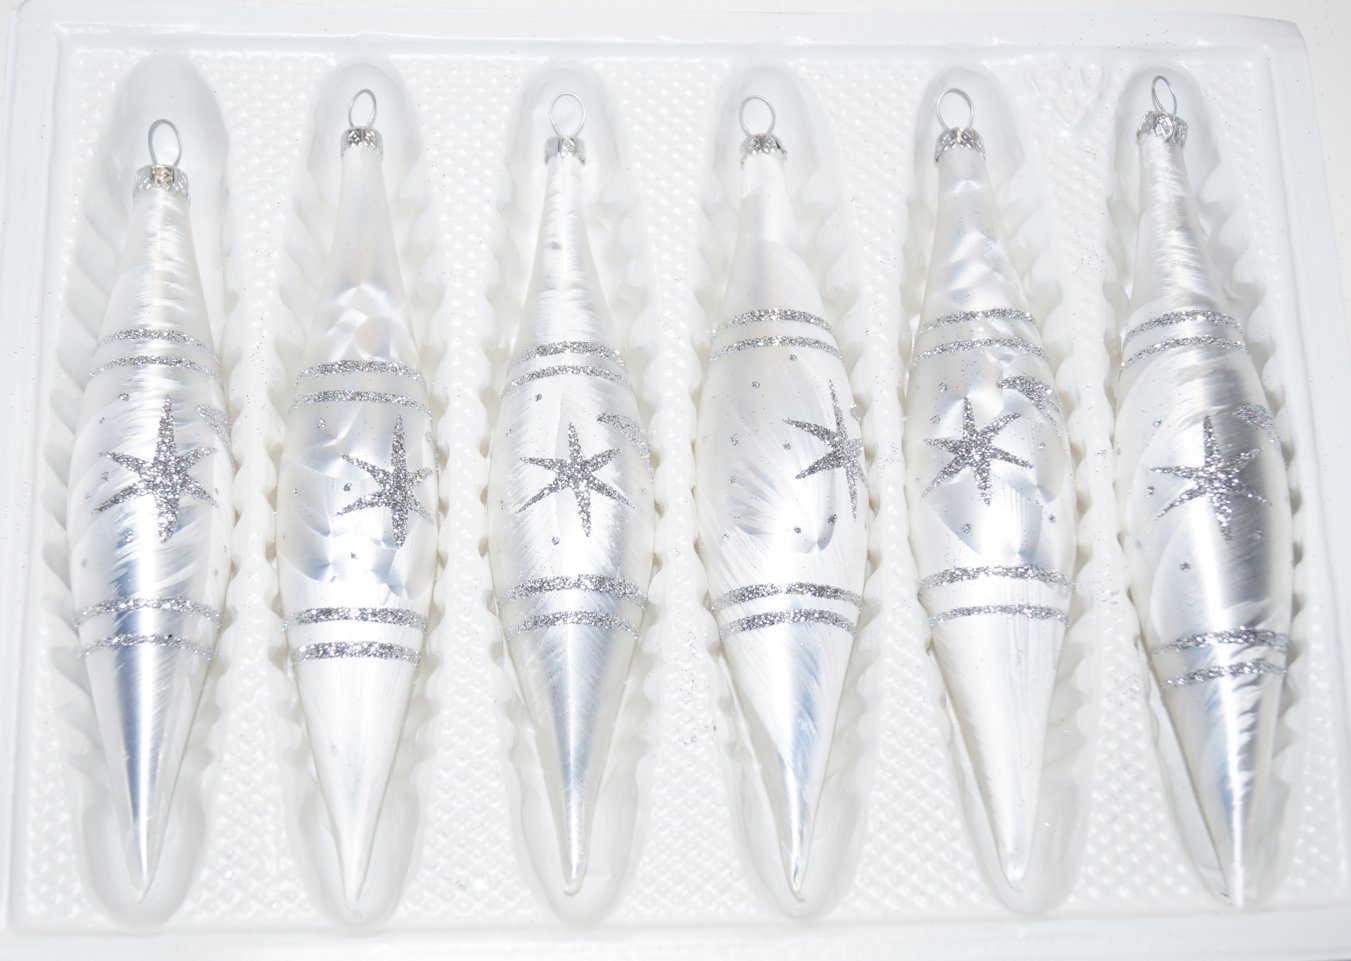 Navidacio Christbaumschmuck 6 tlg. Glas-Zapfen Set in Ice Weiss Silber" Komet" von Navidacio